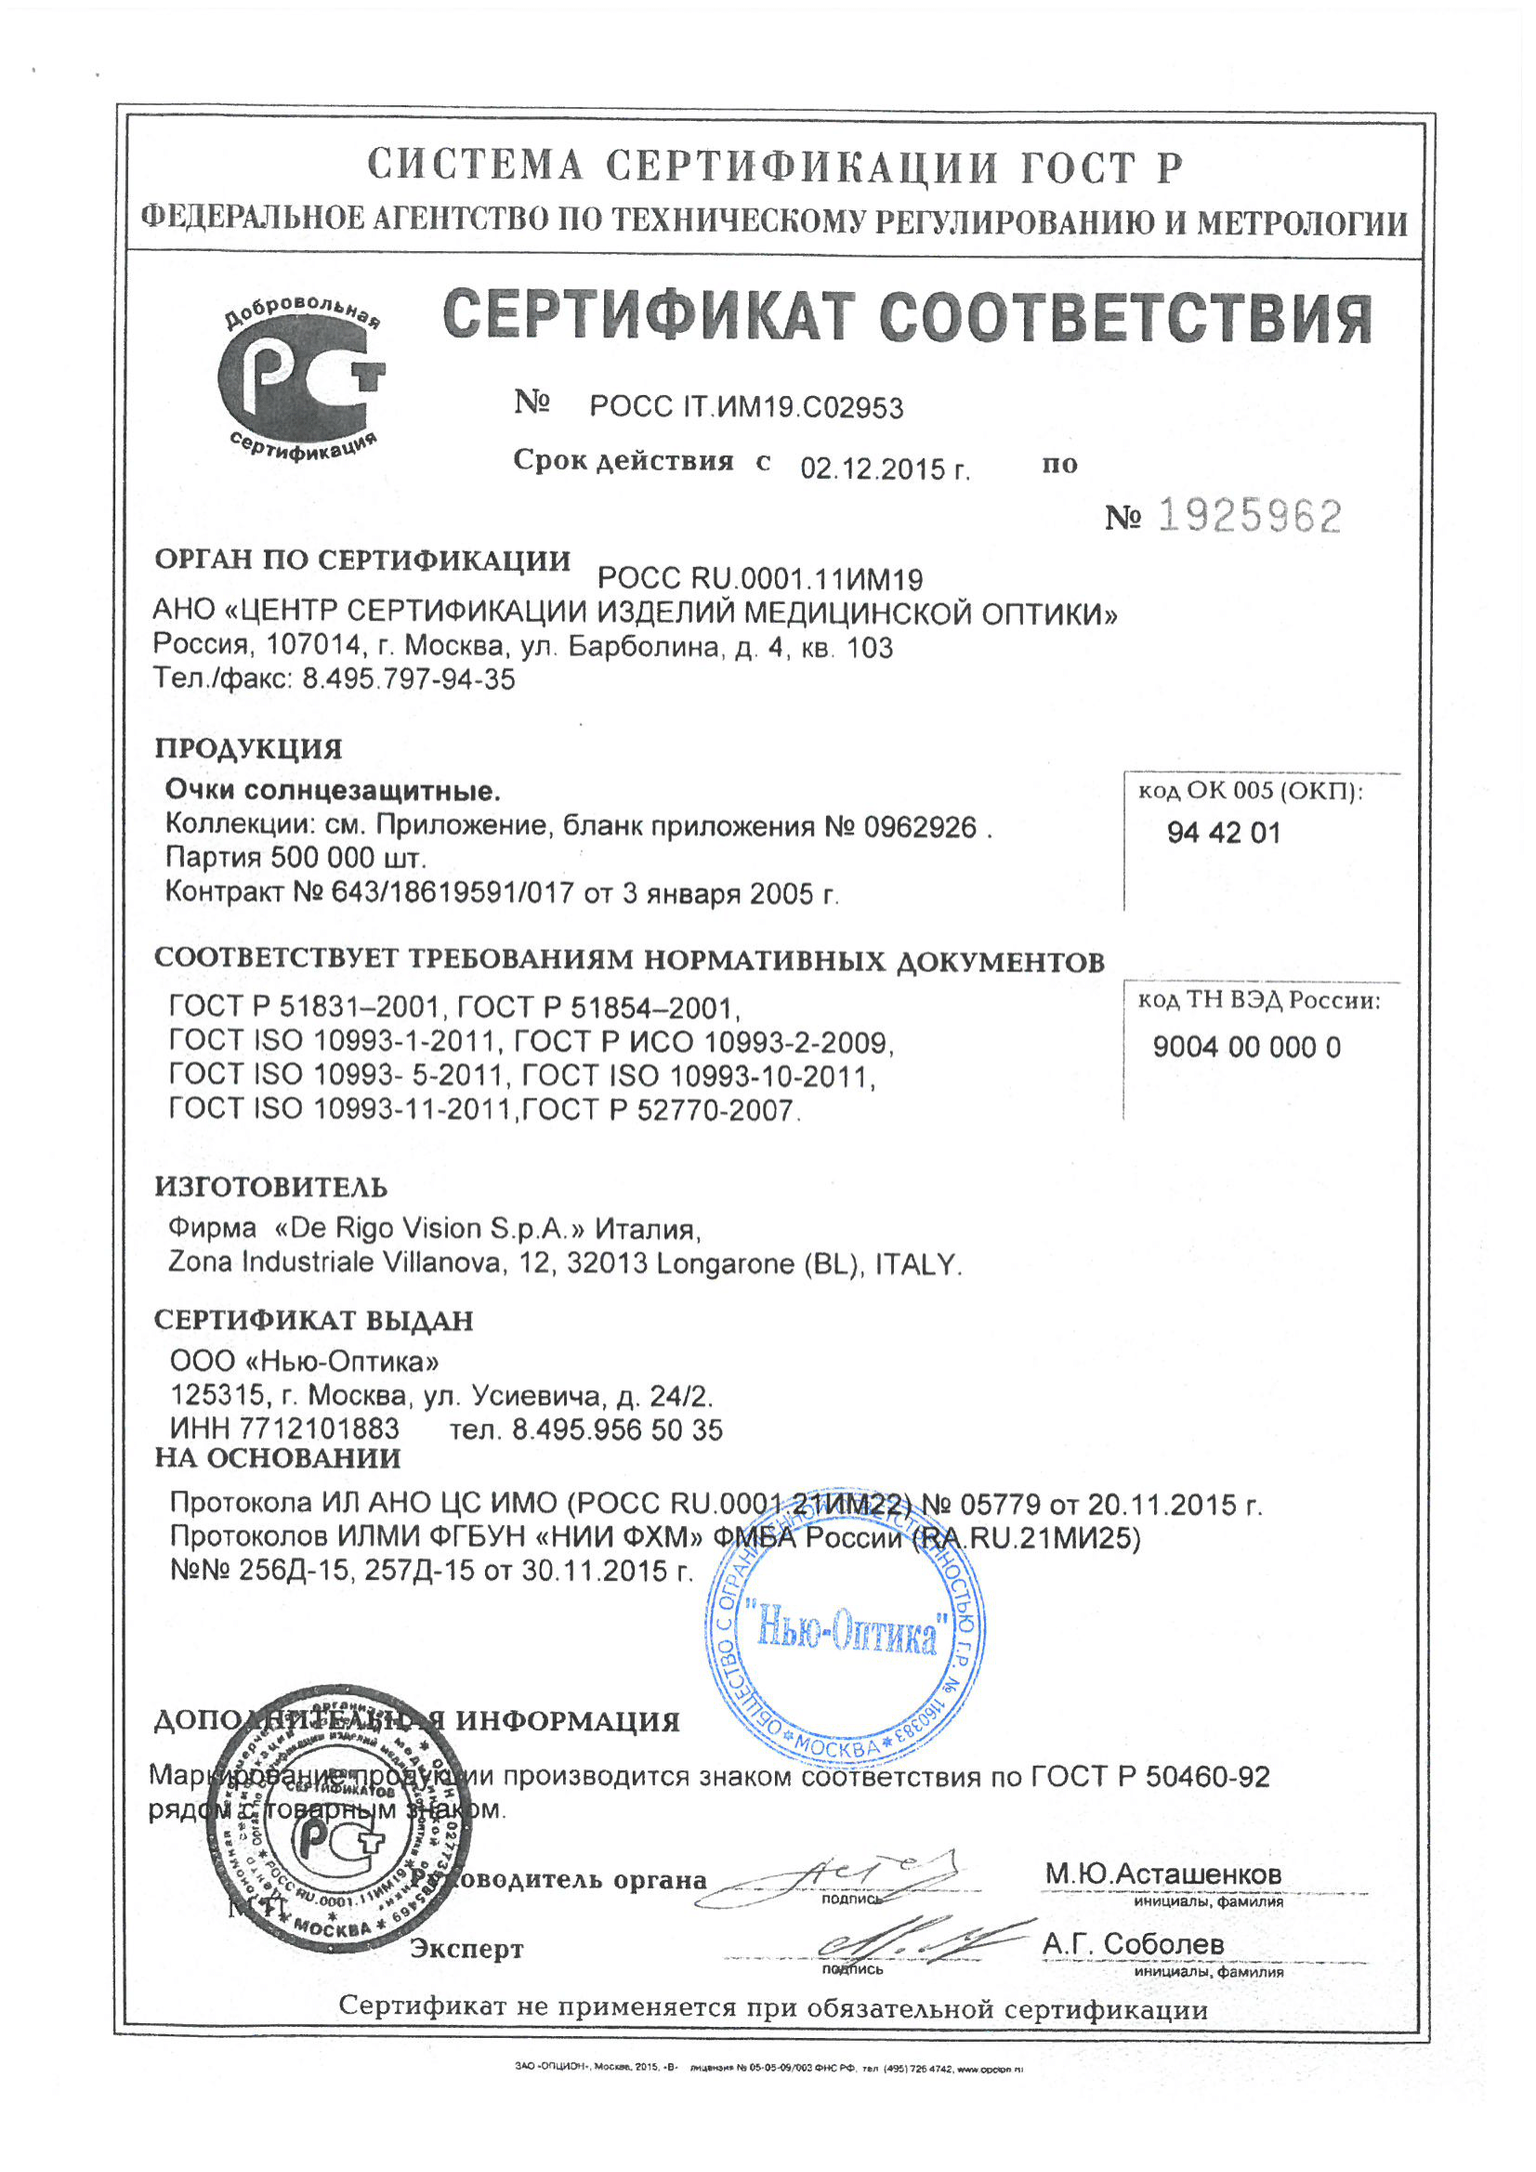 /images/certificates/sertificate6-2.png